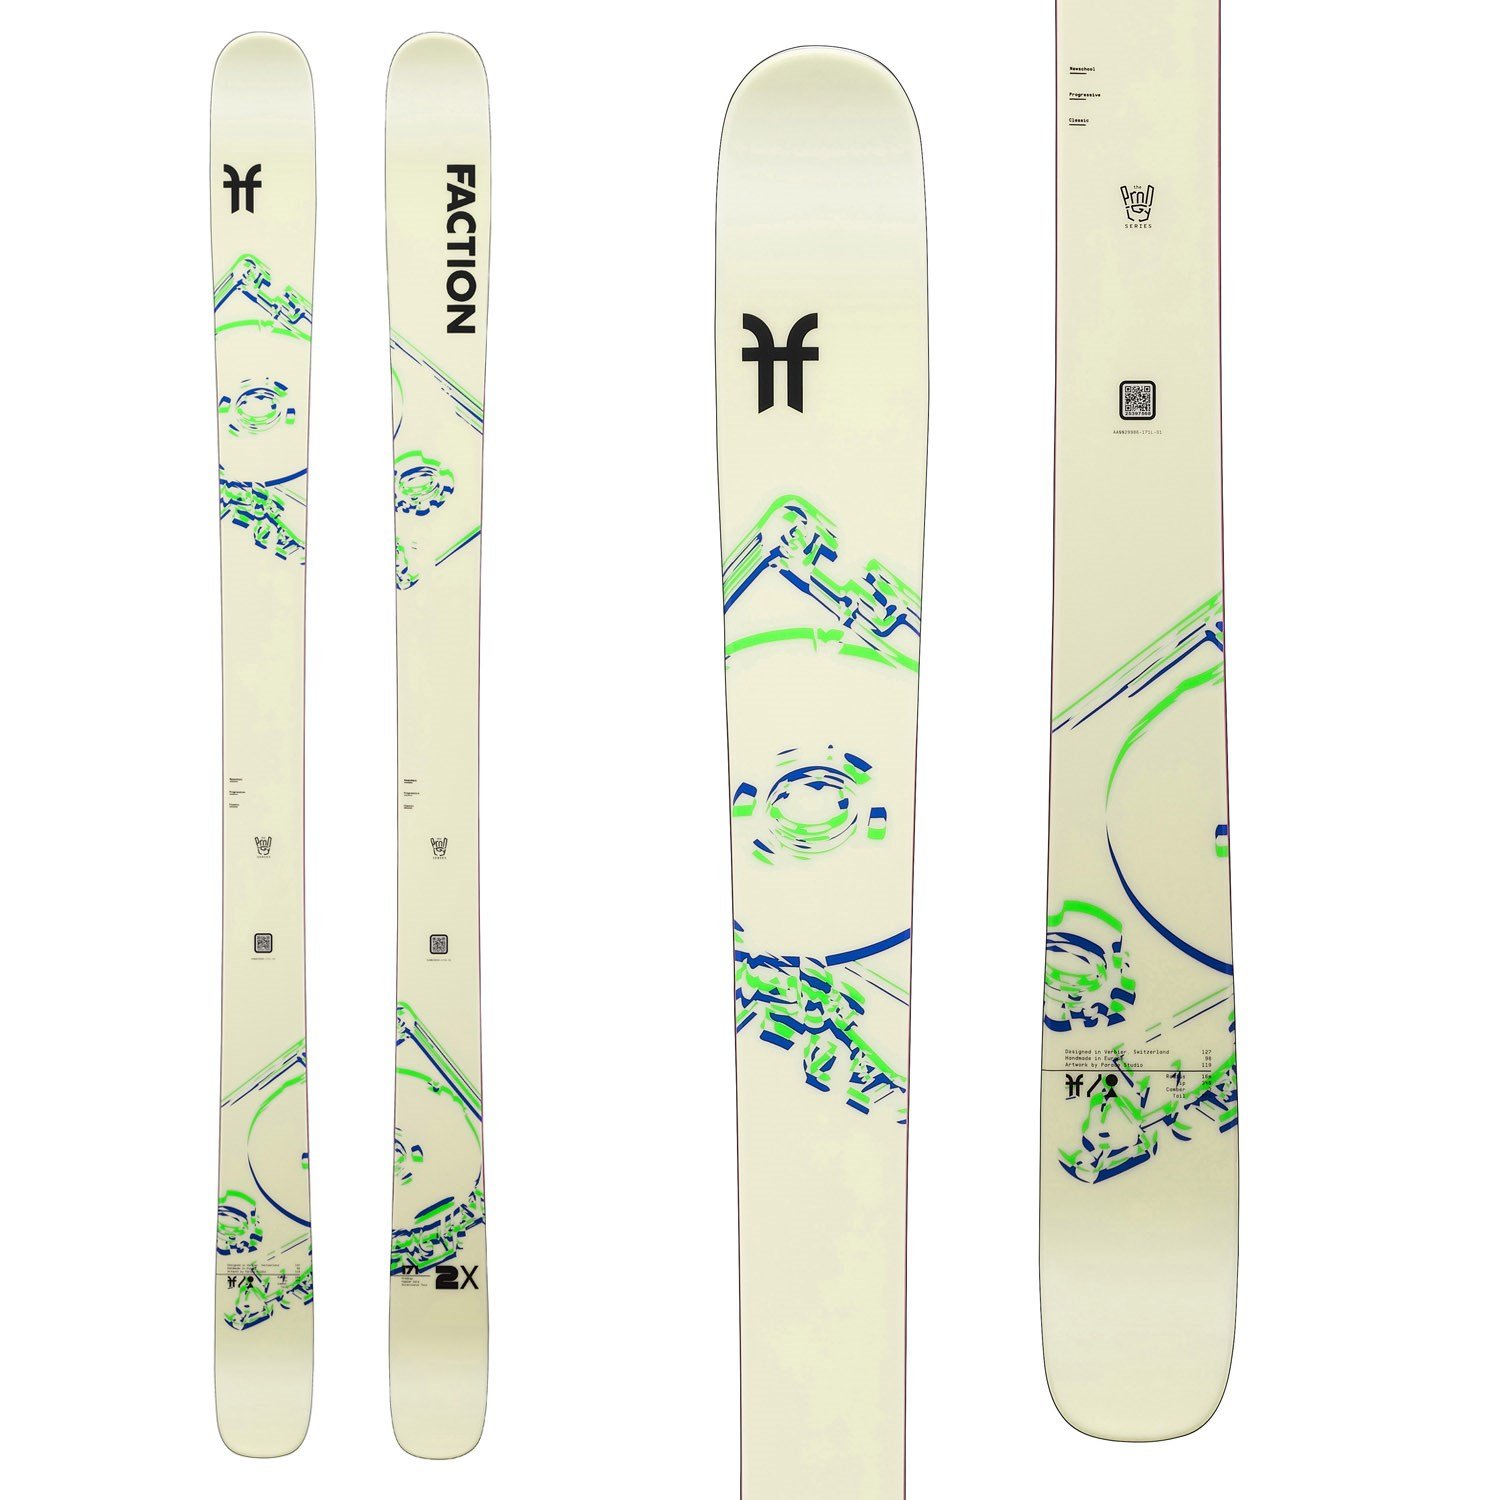 2x Travel Snowboard Lock Snowboarding Gear Ski Lock for Board